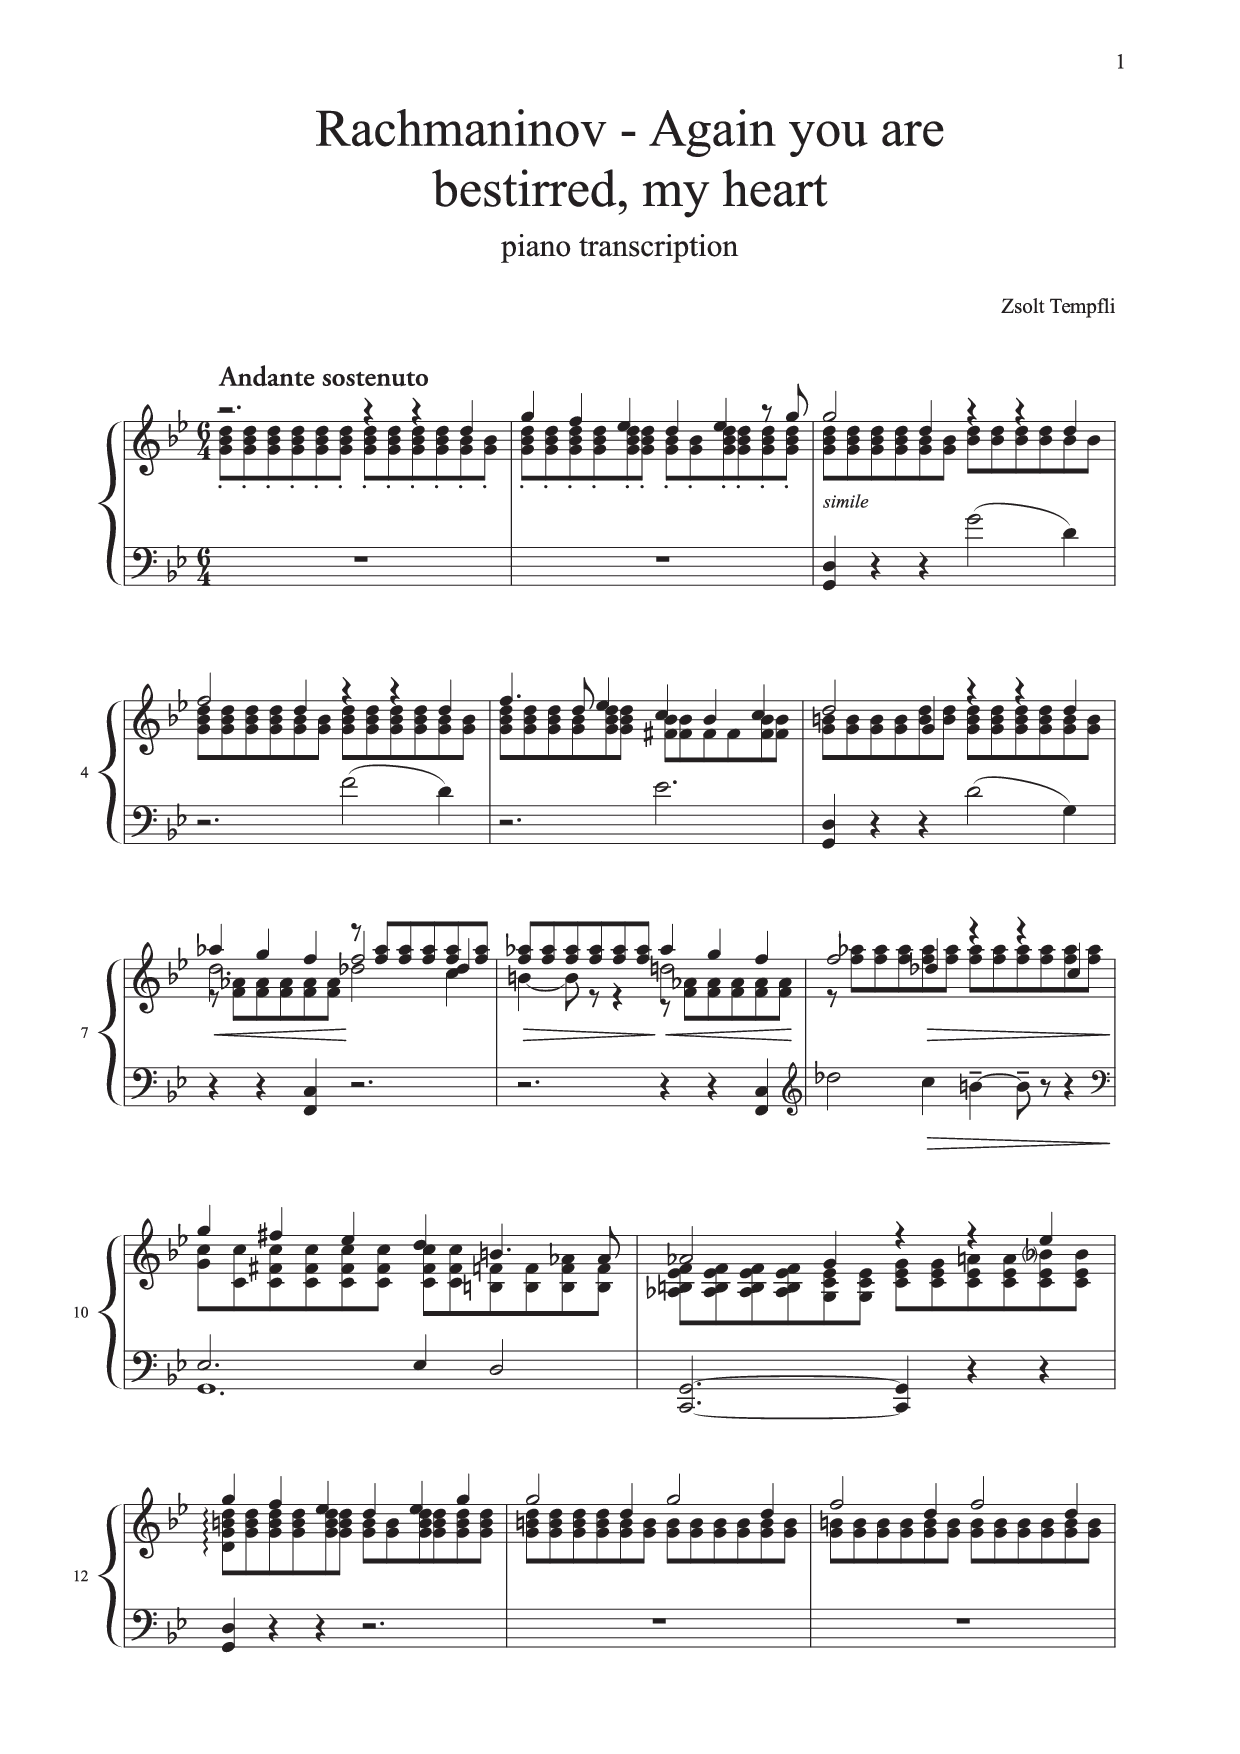 Zsolt Tempfli - Sergei Rachmaninov - Again You Are Bestirred, My Heart piano transcription